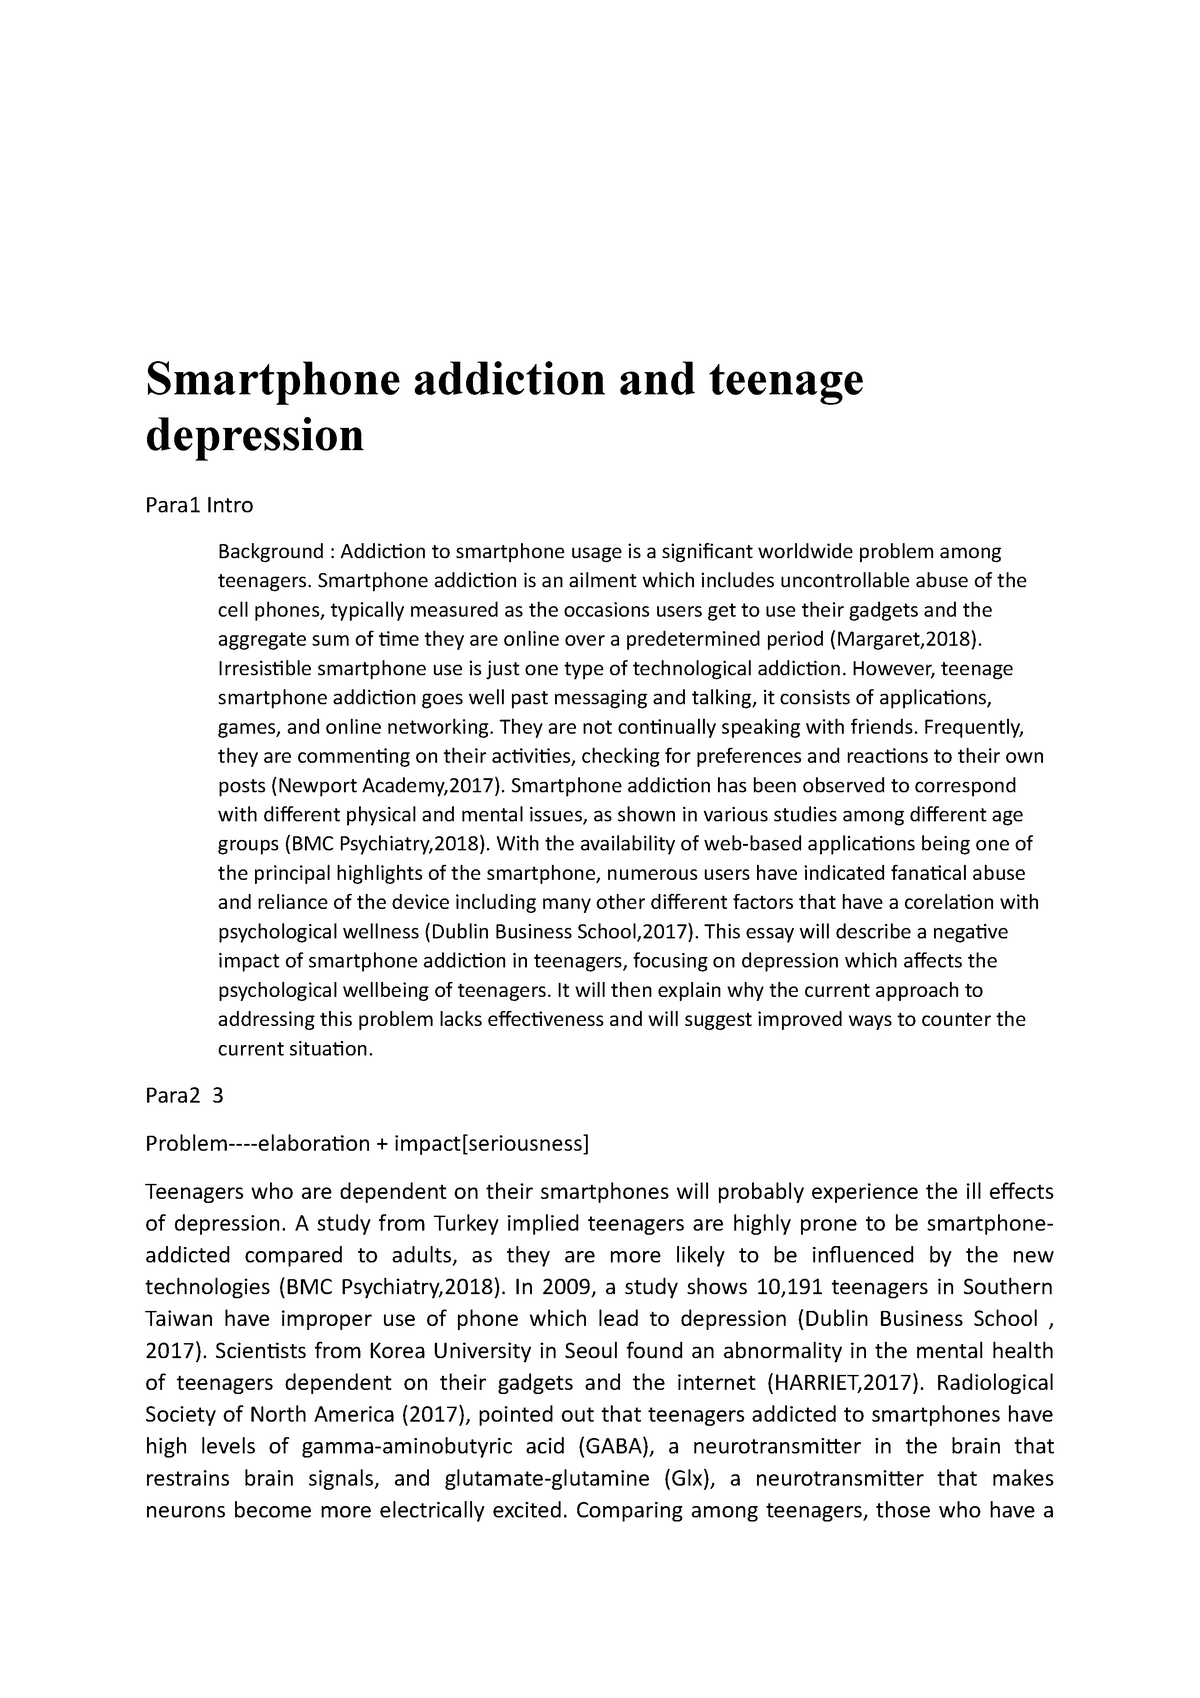 essay about smartphones addiction